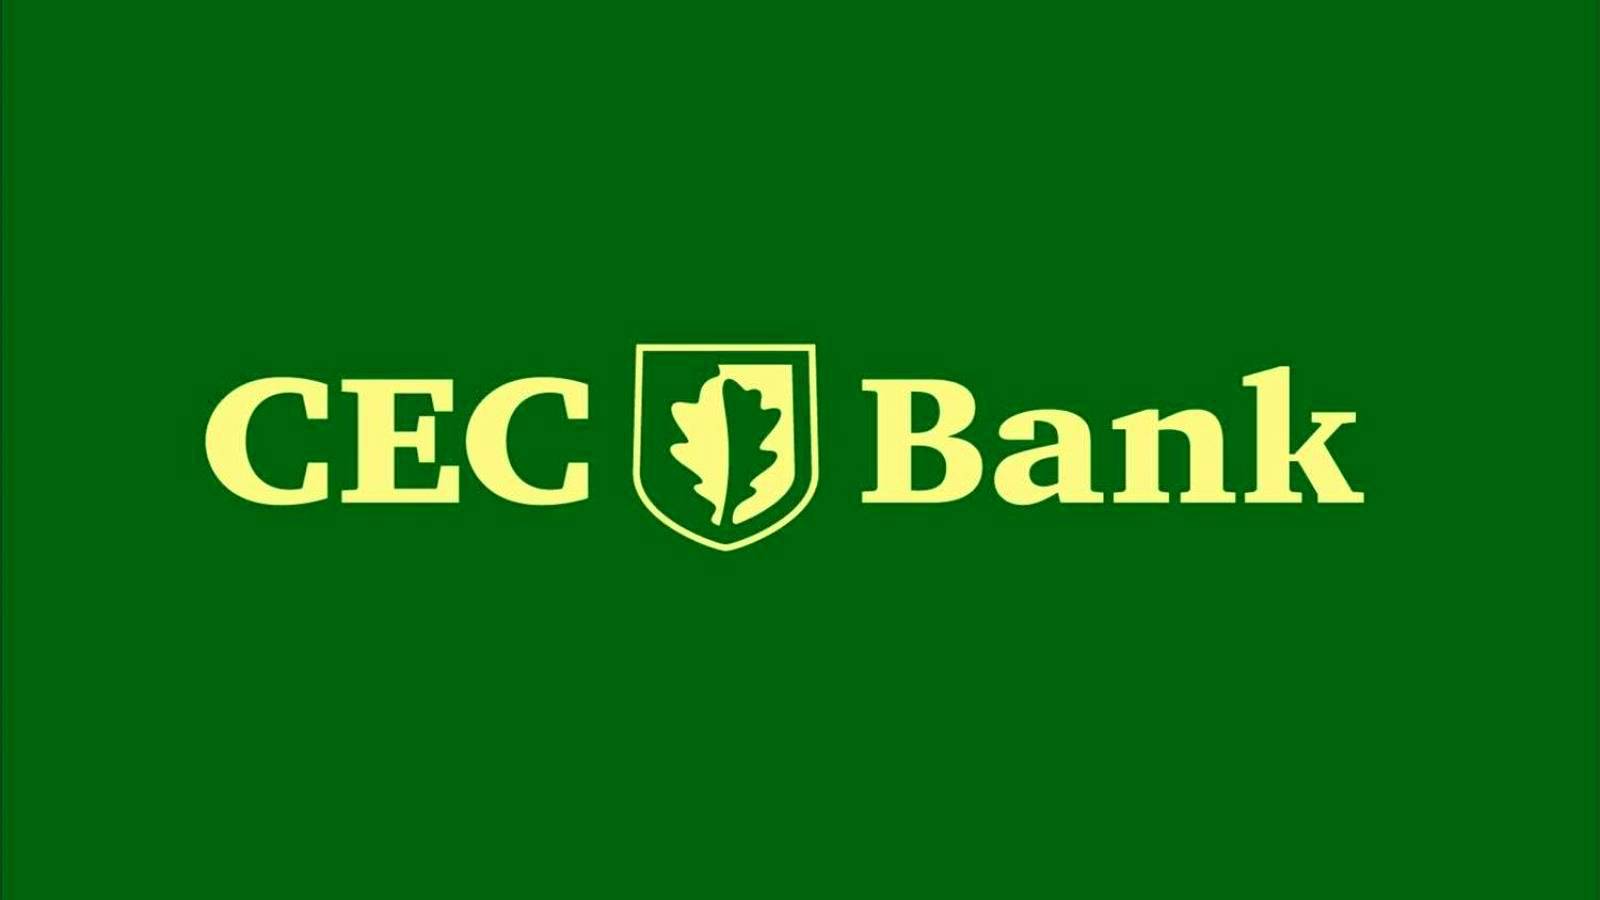 CEC Bank opening